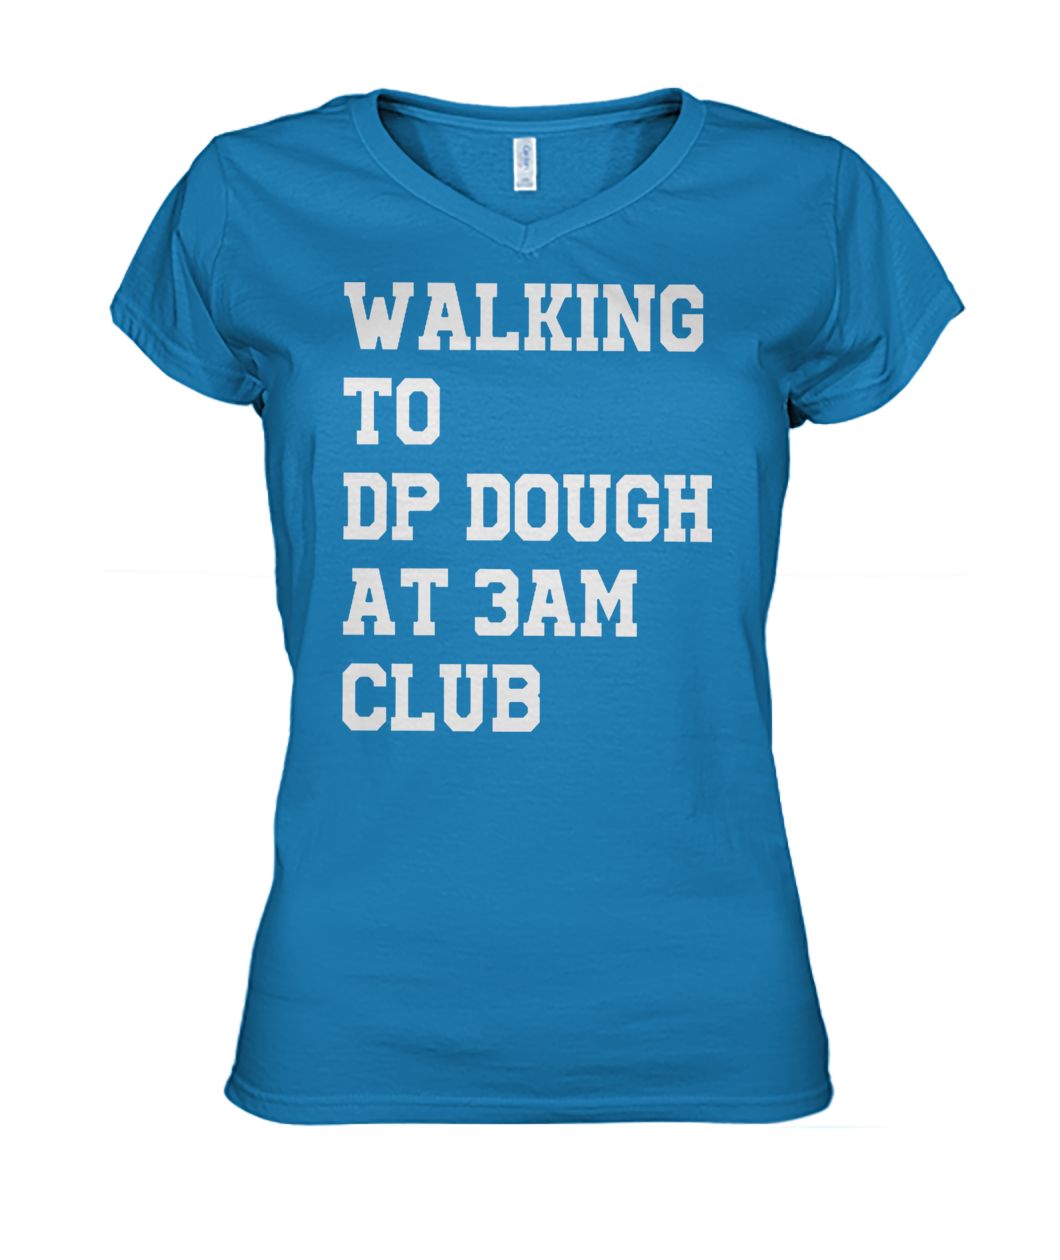 Walking to DP dough at 3am club women's v-neck